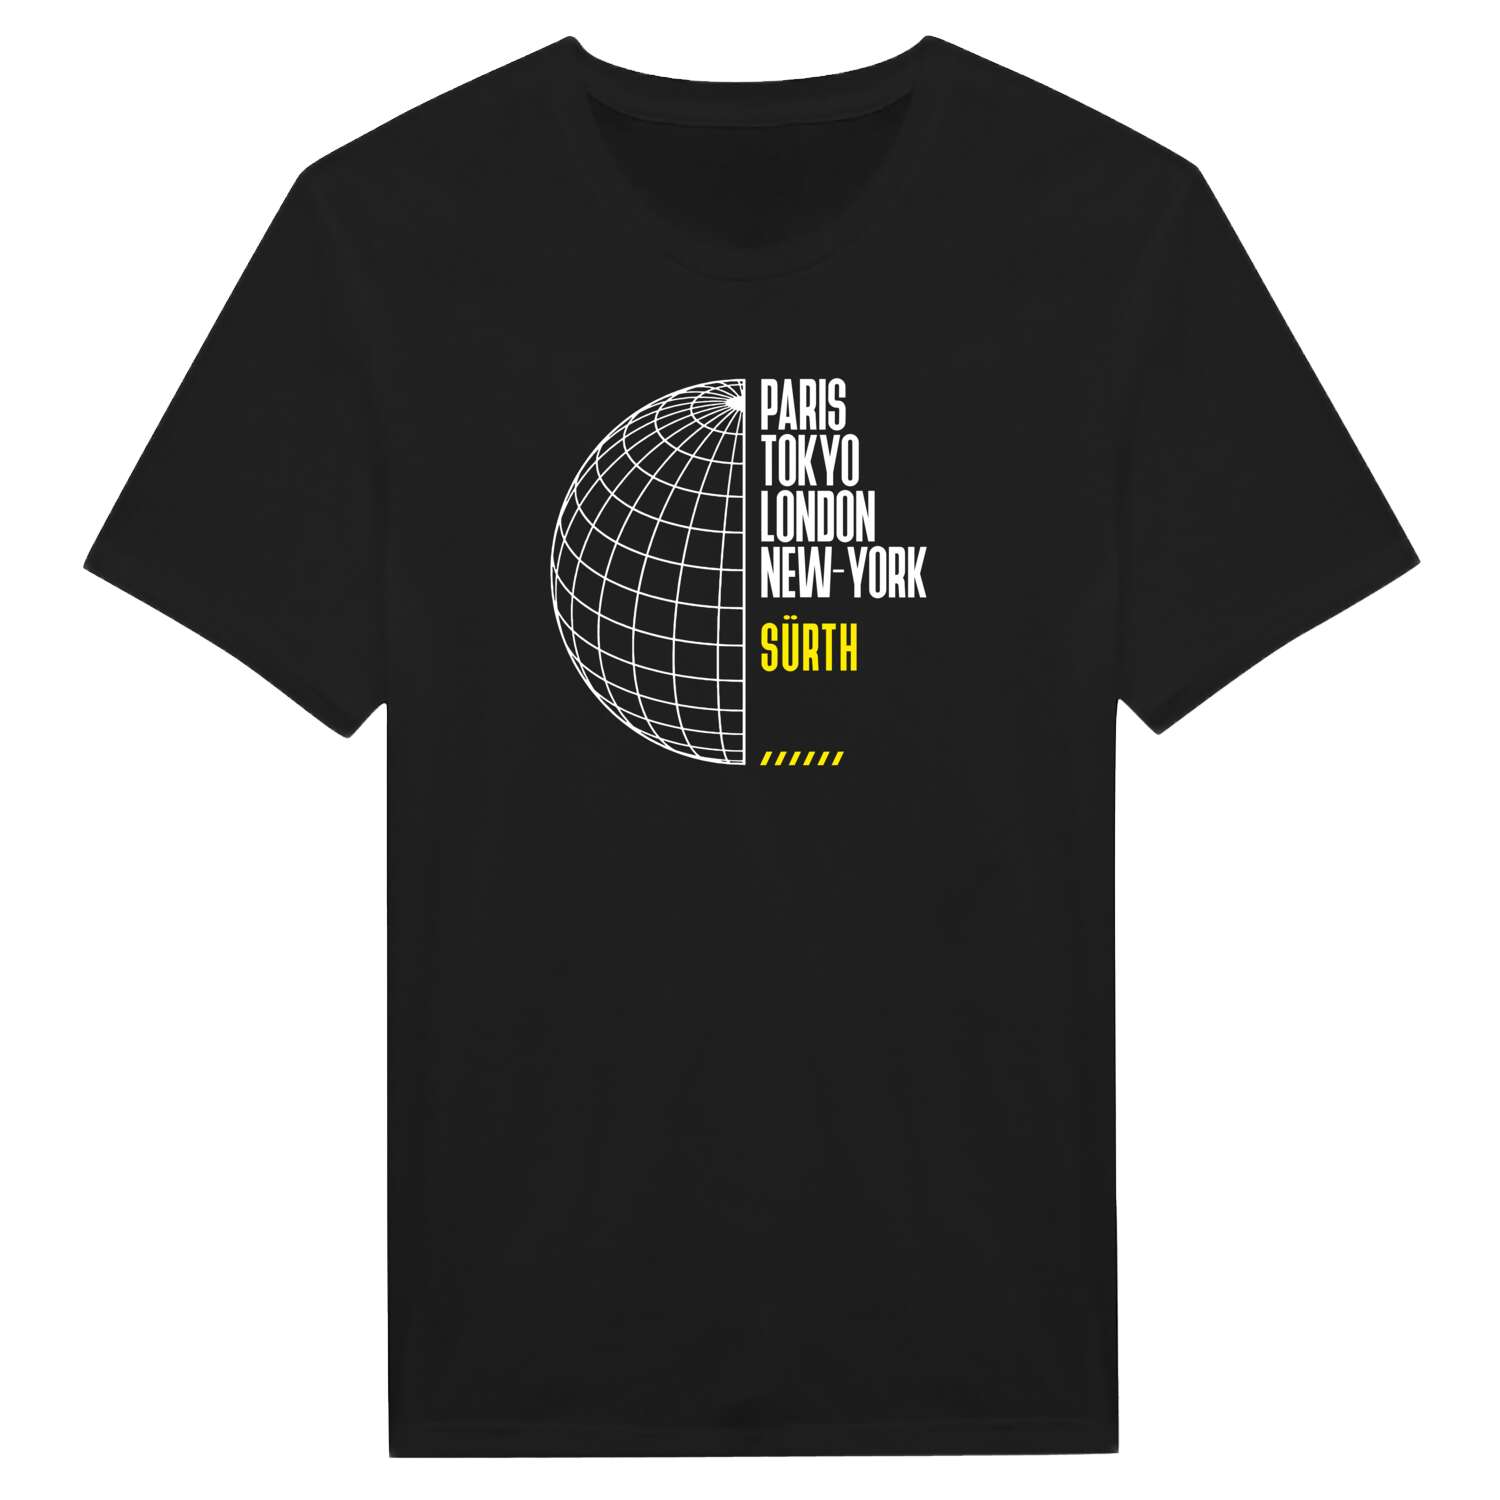 Sürth T-Shirt »Paris Tokyo London«